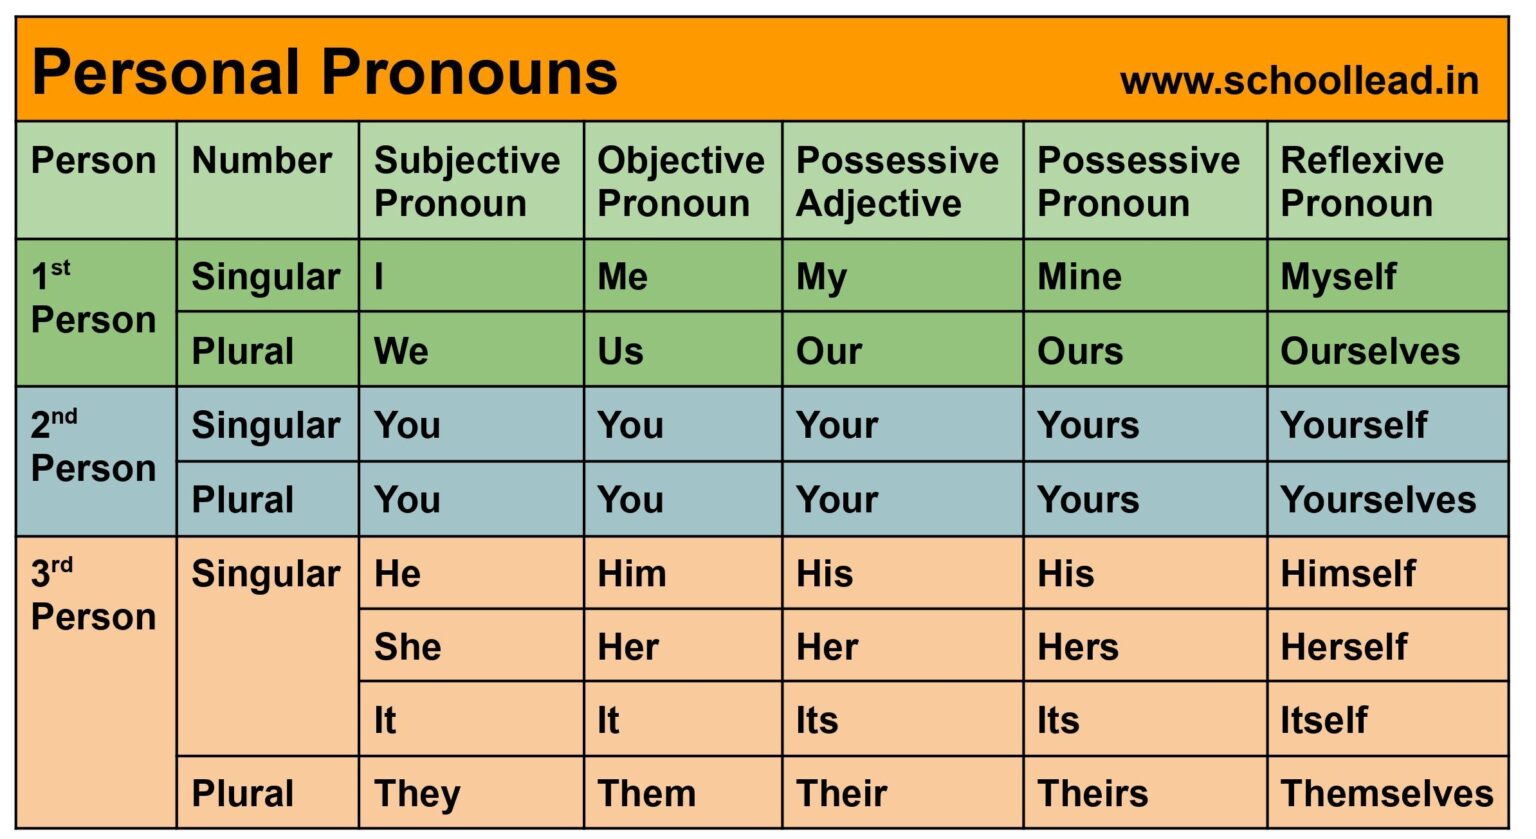 personal-pronouns-the-pronoun-school-lead